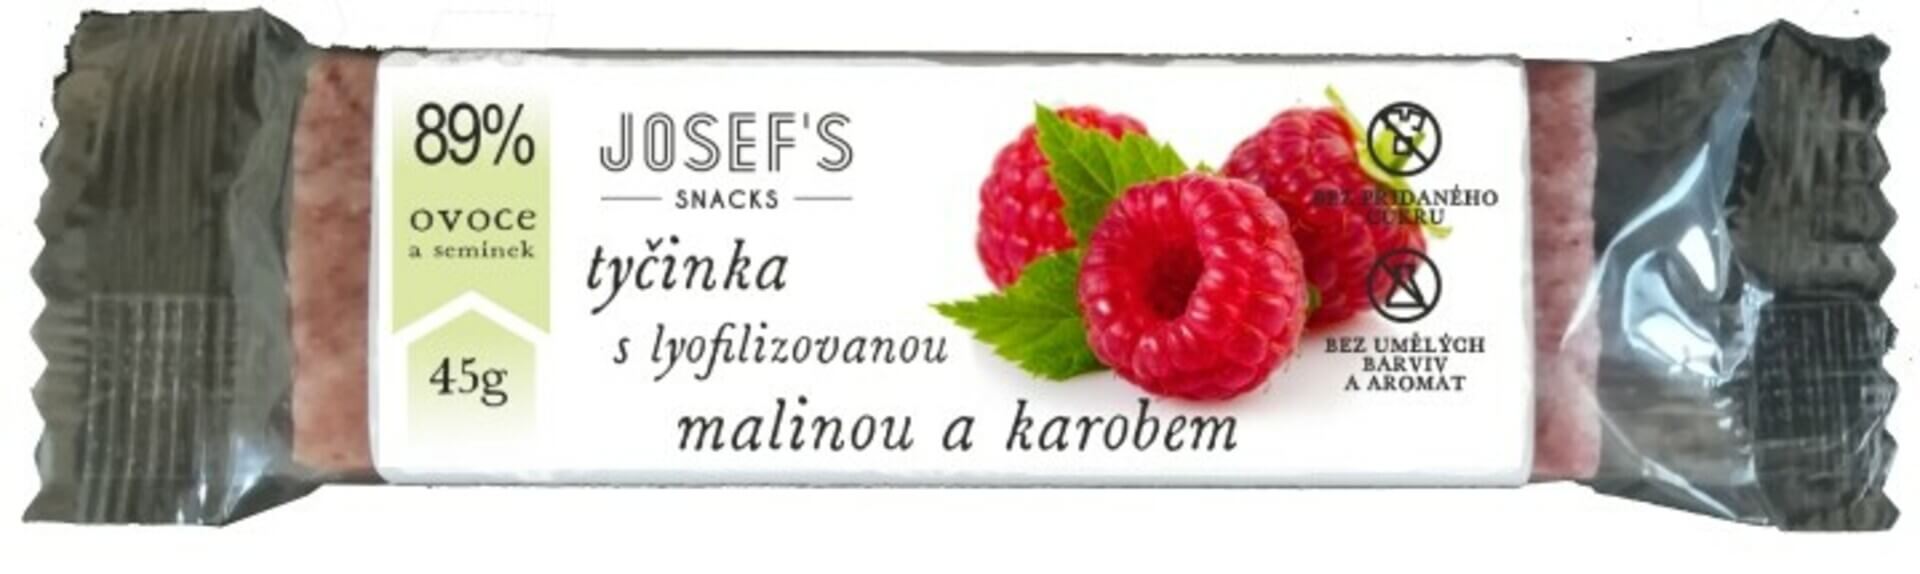 E-shop Josef 's snacks Ovocná tyčinka s lyofilizovanou malinou a carob 45 g